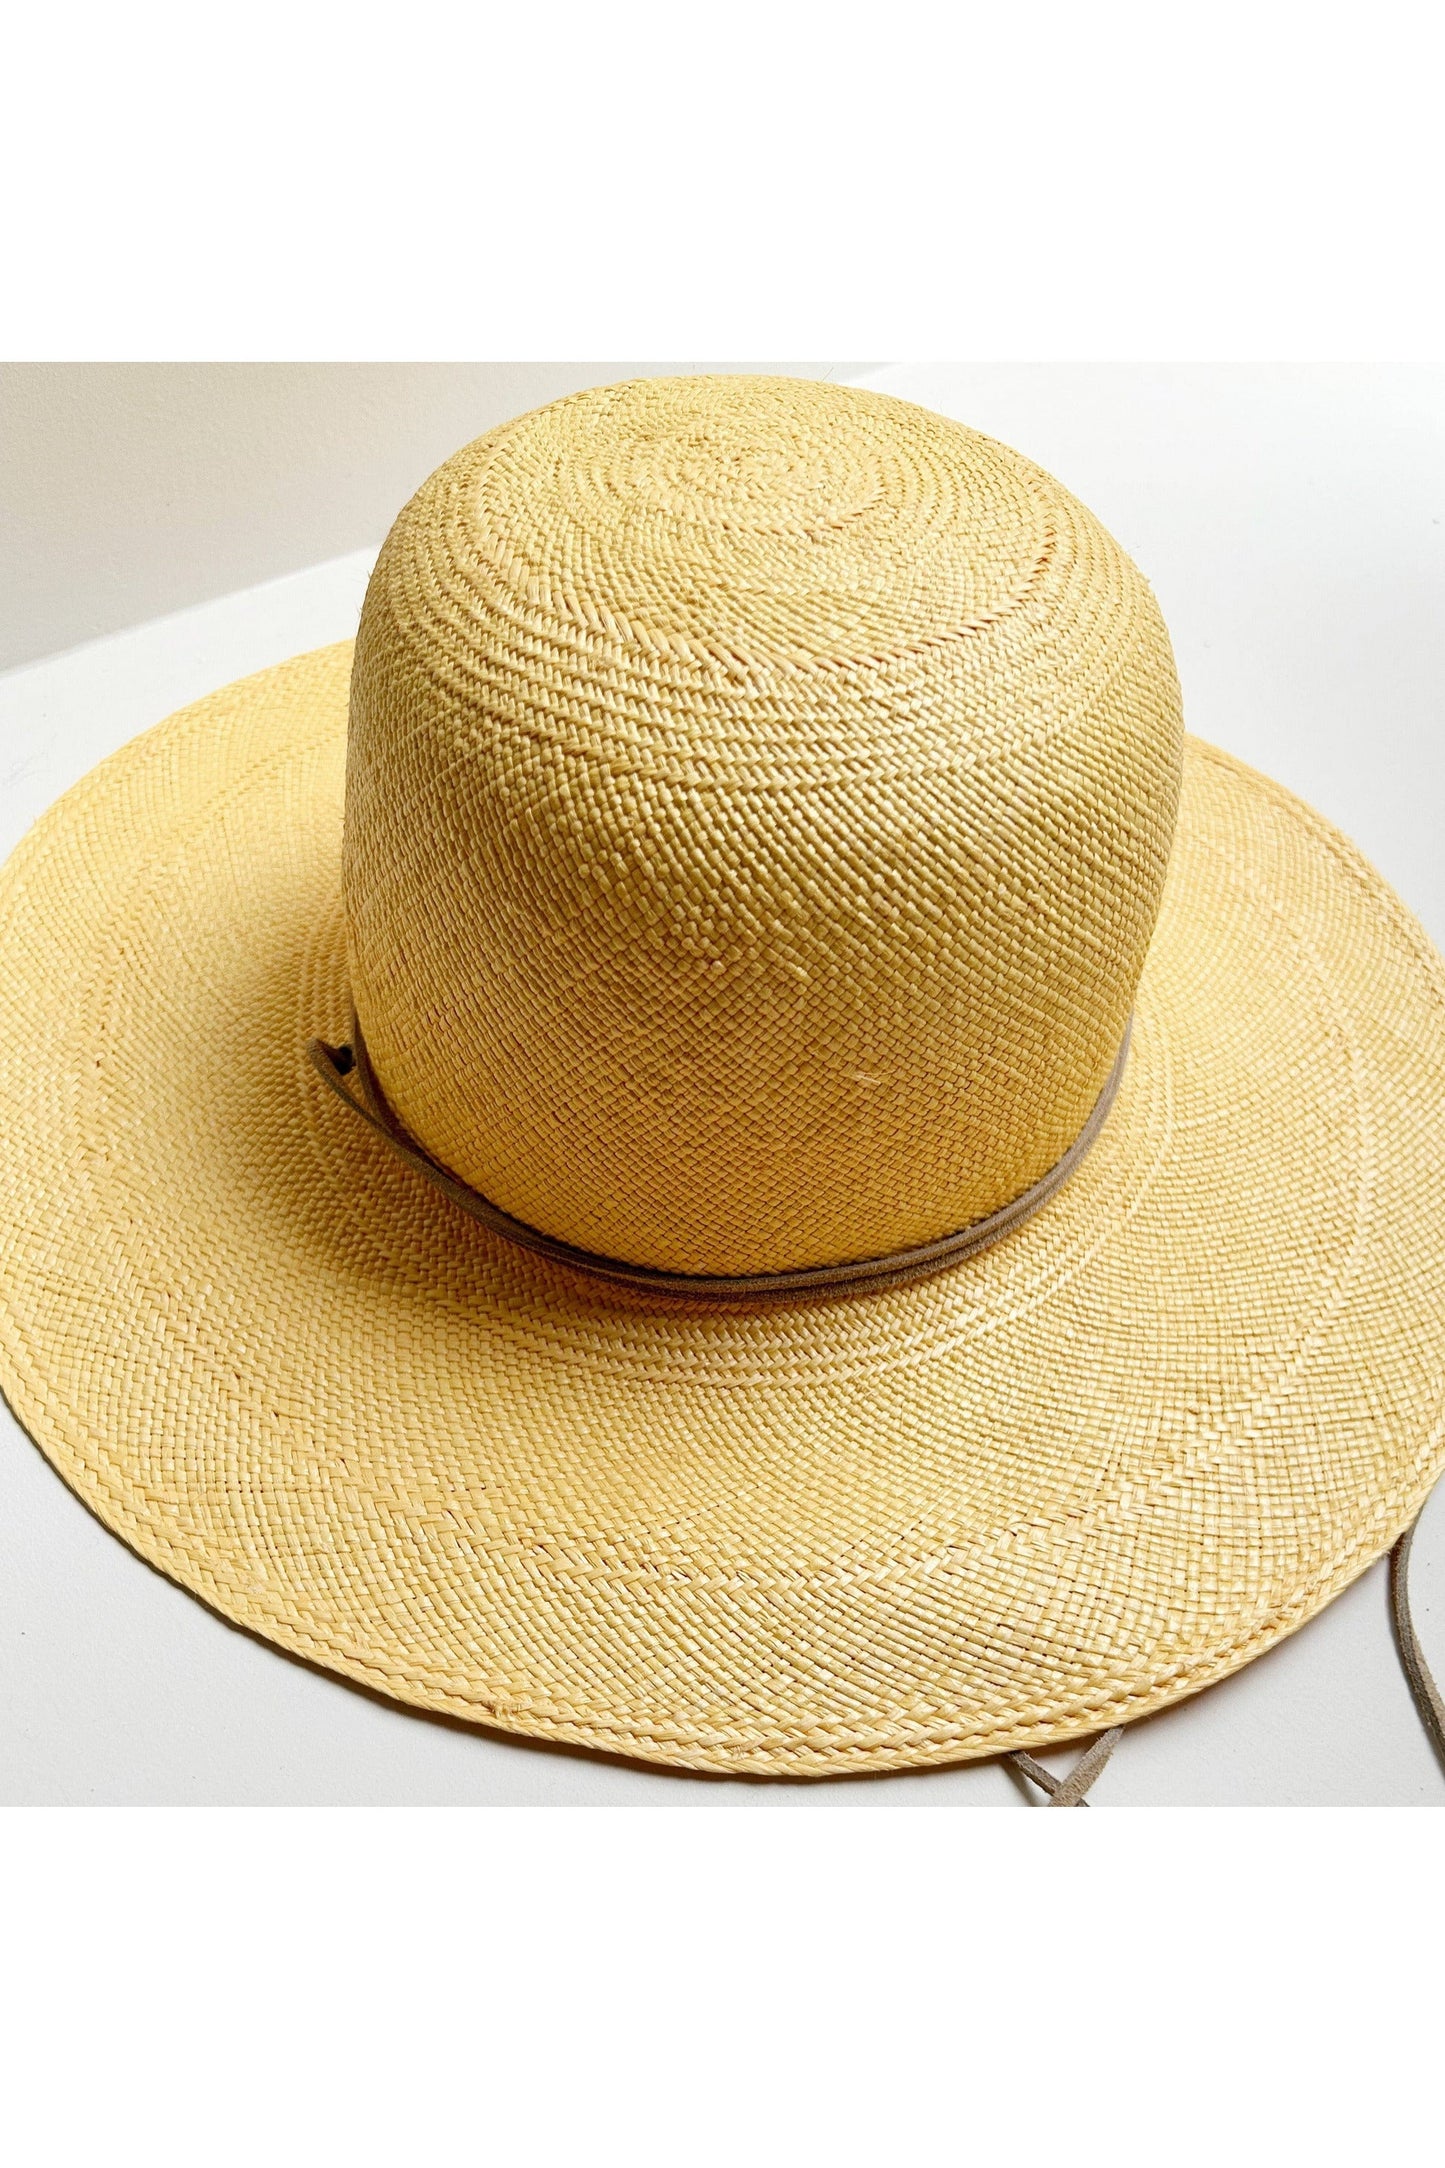 Suncrest Sun Hat in Panama Straw Accessories Brookes Boswell   